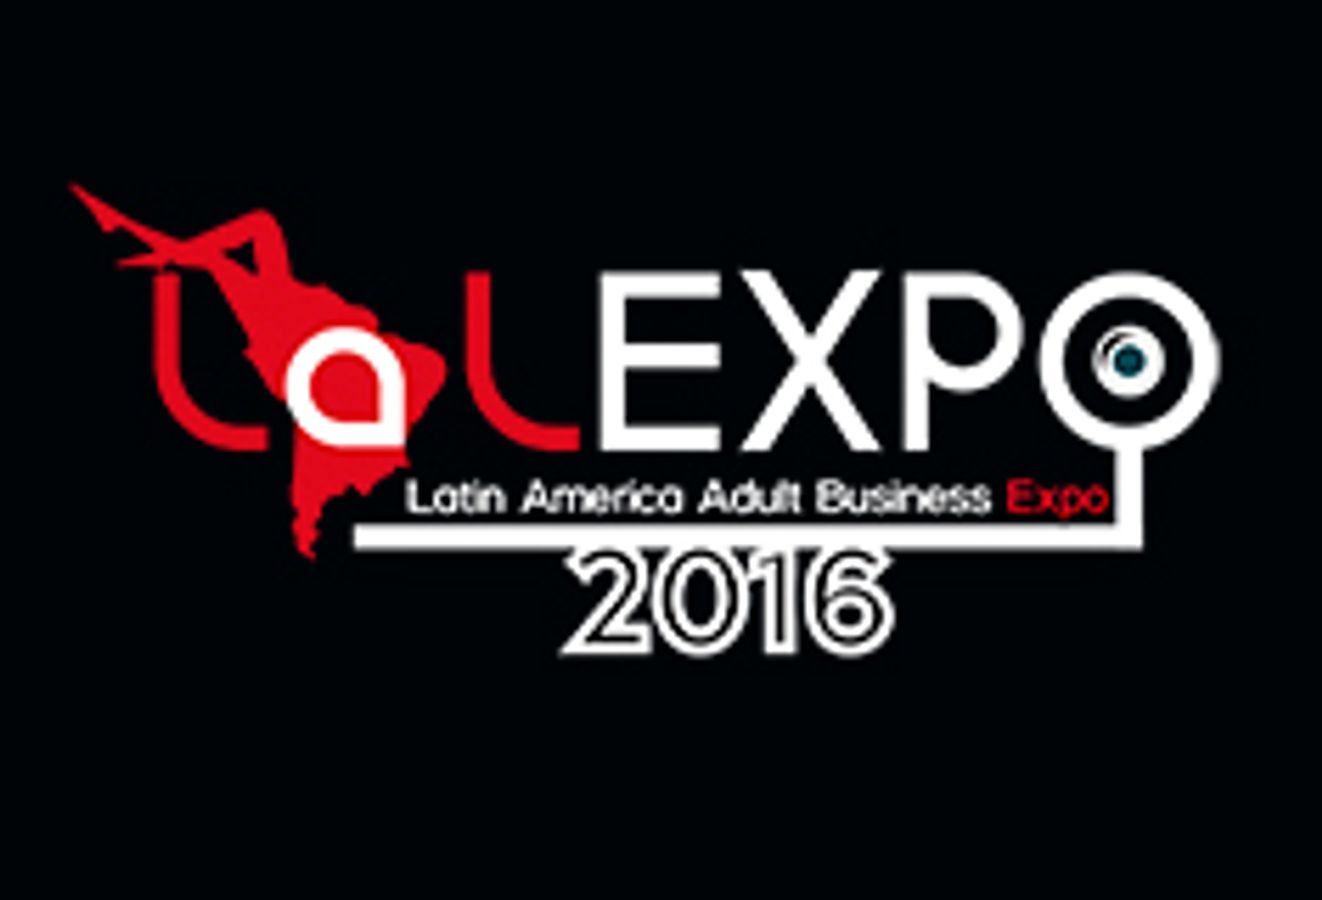 Latin America Adult Business Expo 2020 (Lalexpo)